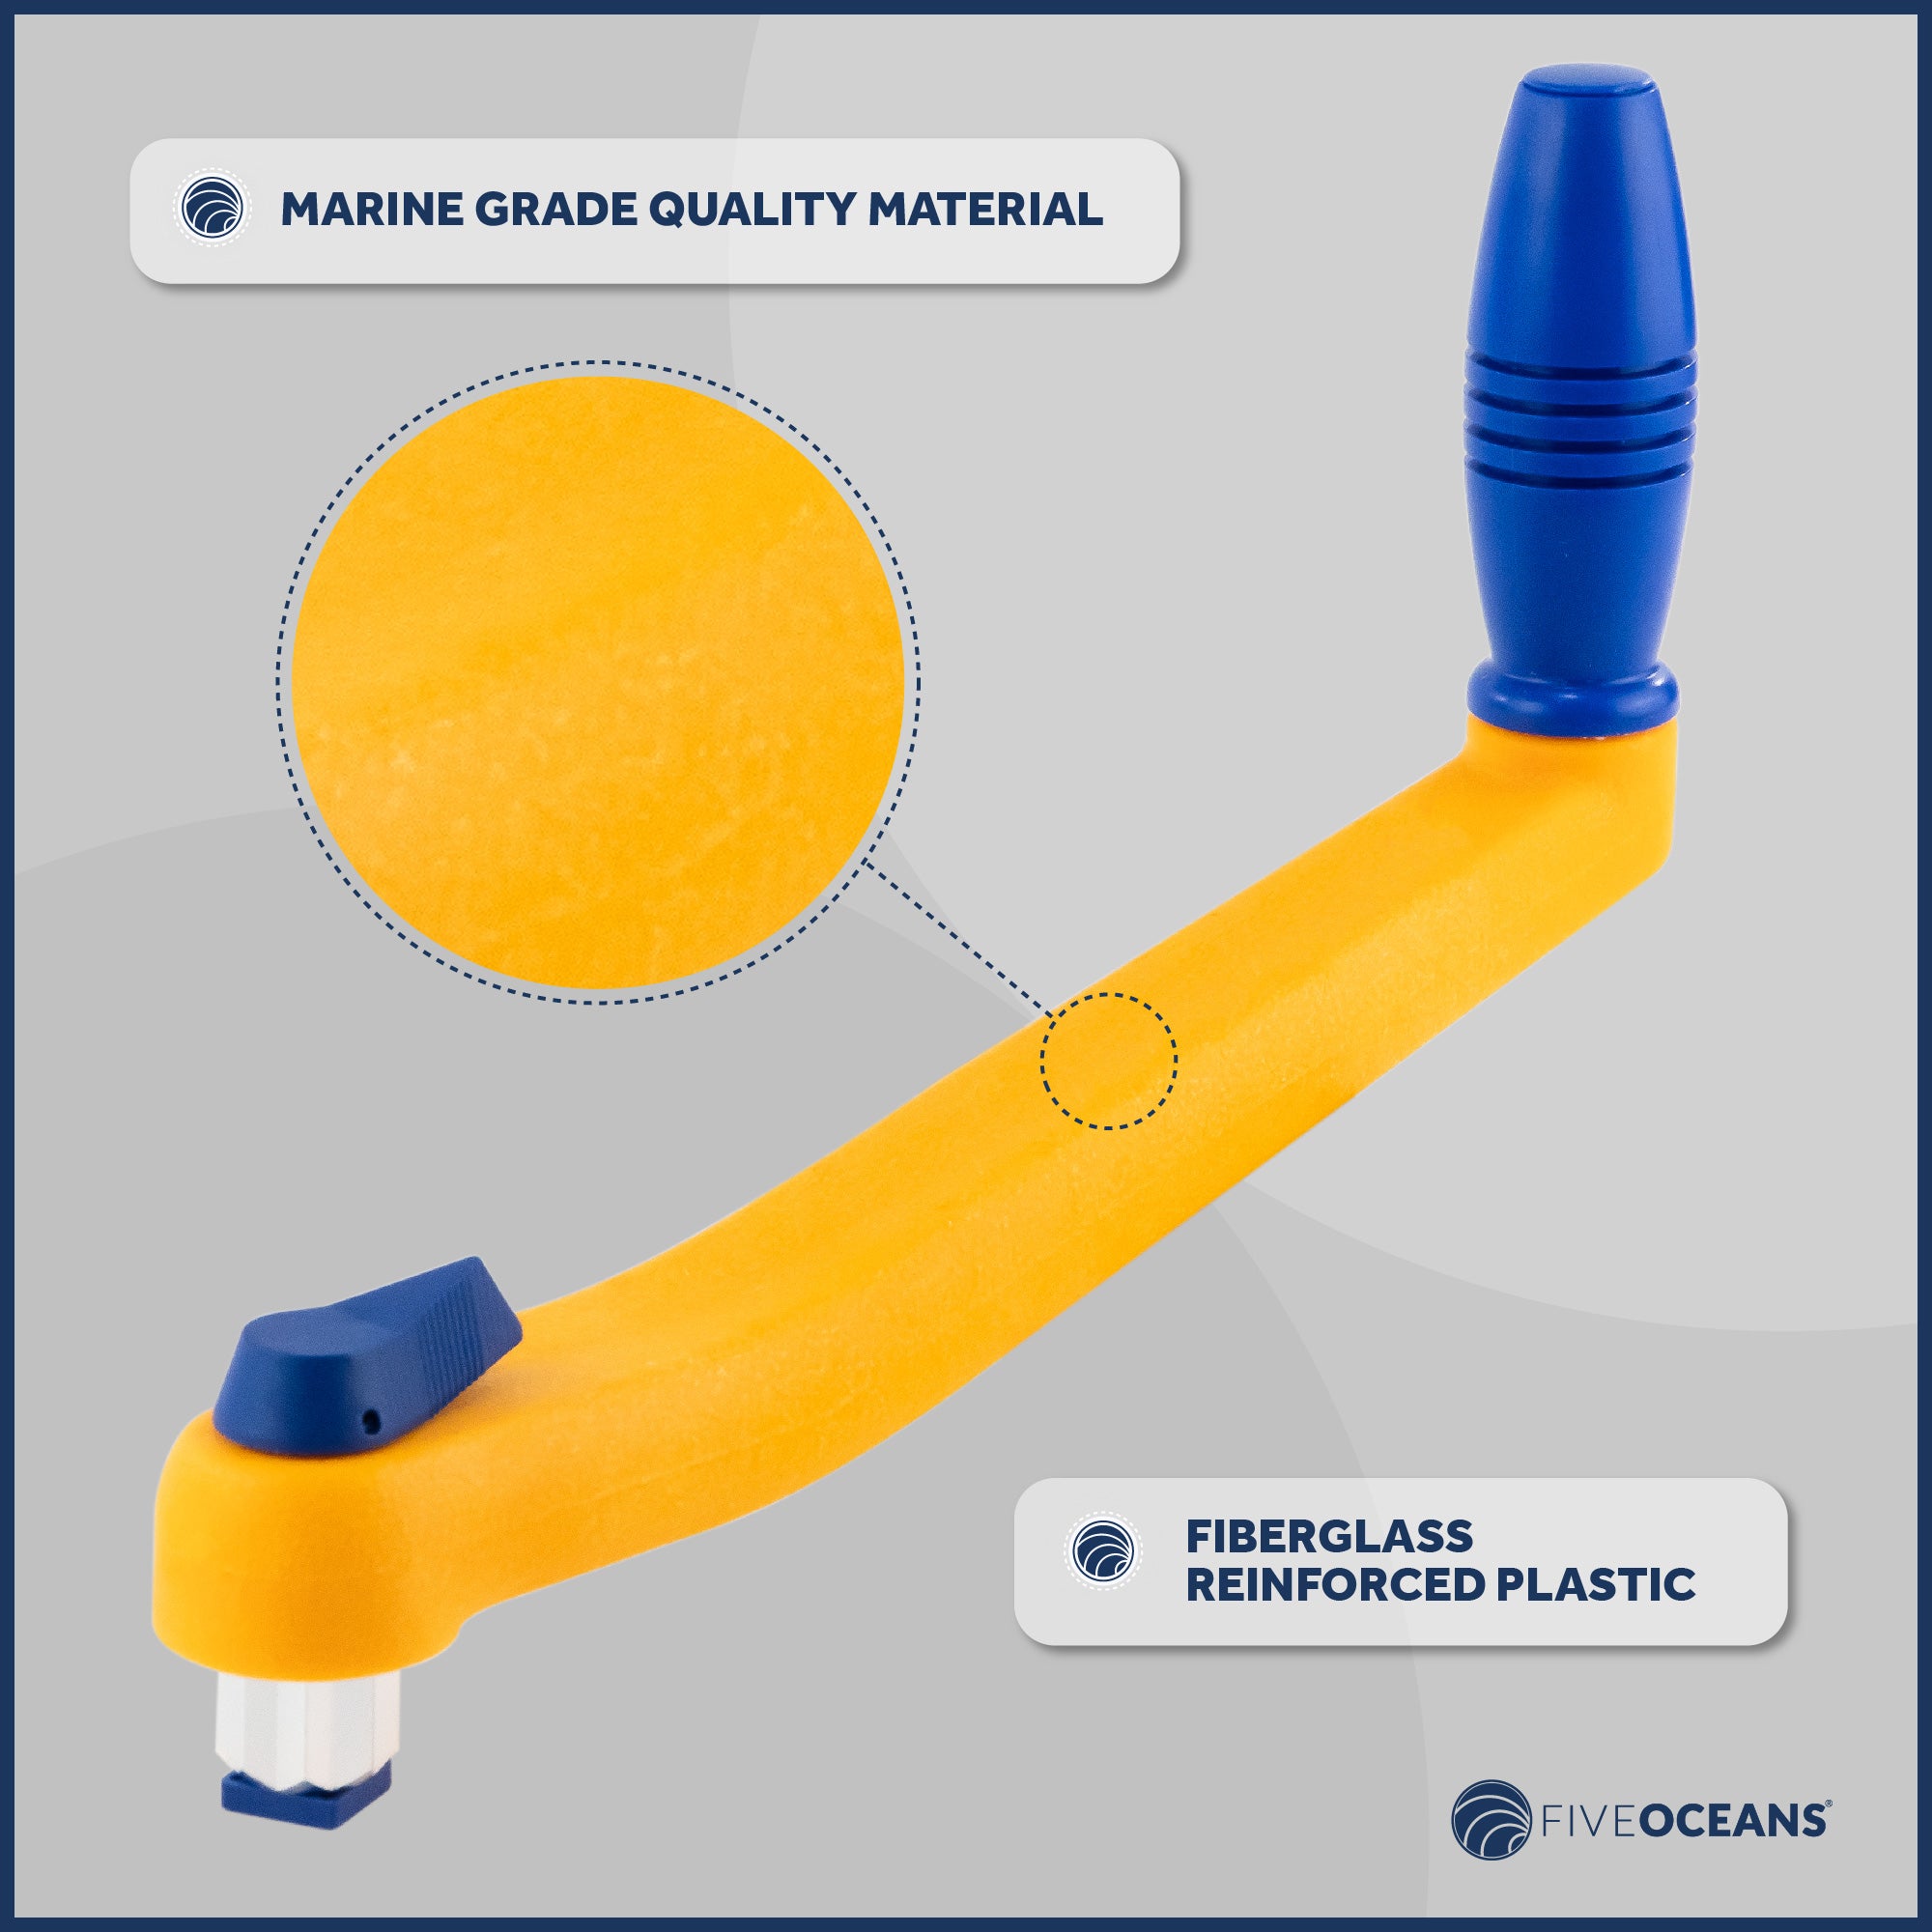 10" Universal Floating Lock-in Winch Handle, Orange/Blue, 2-Pack - FO87-M2